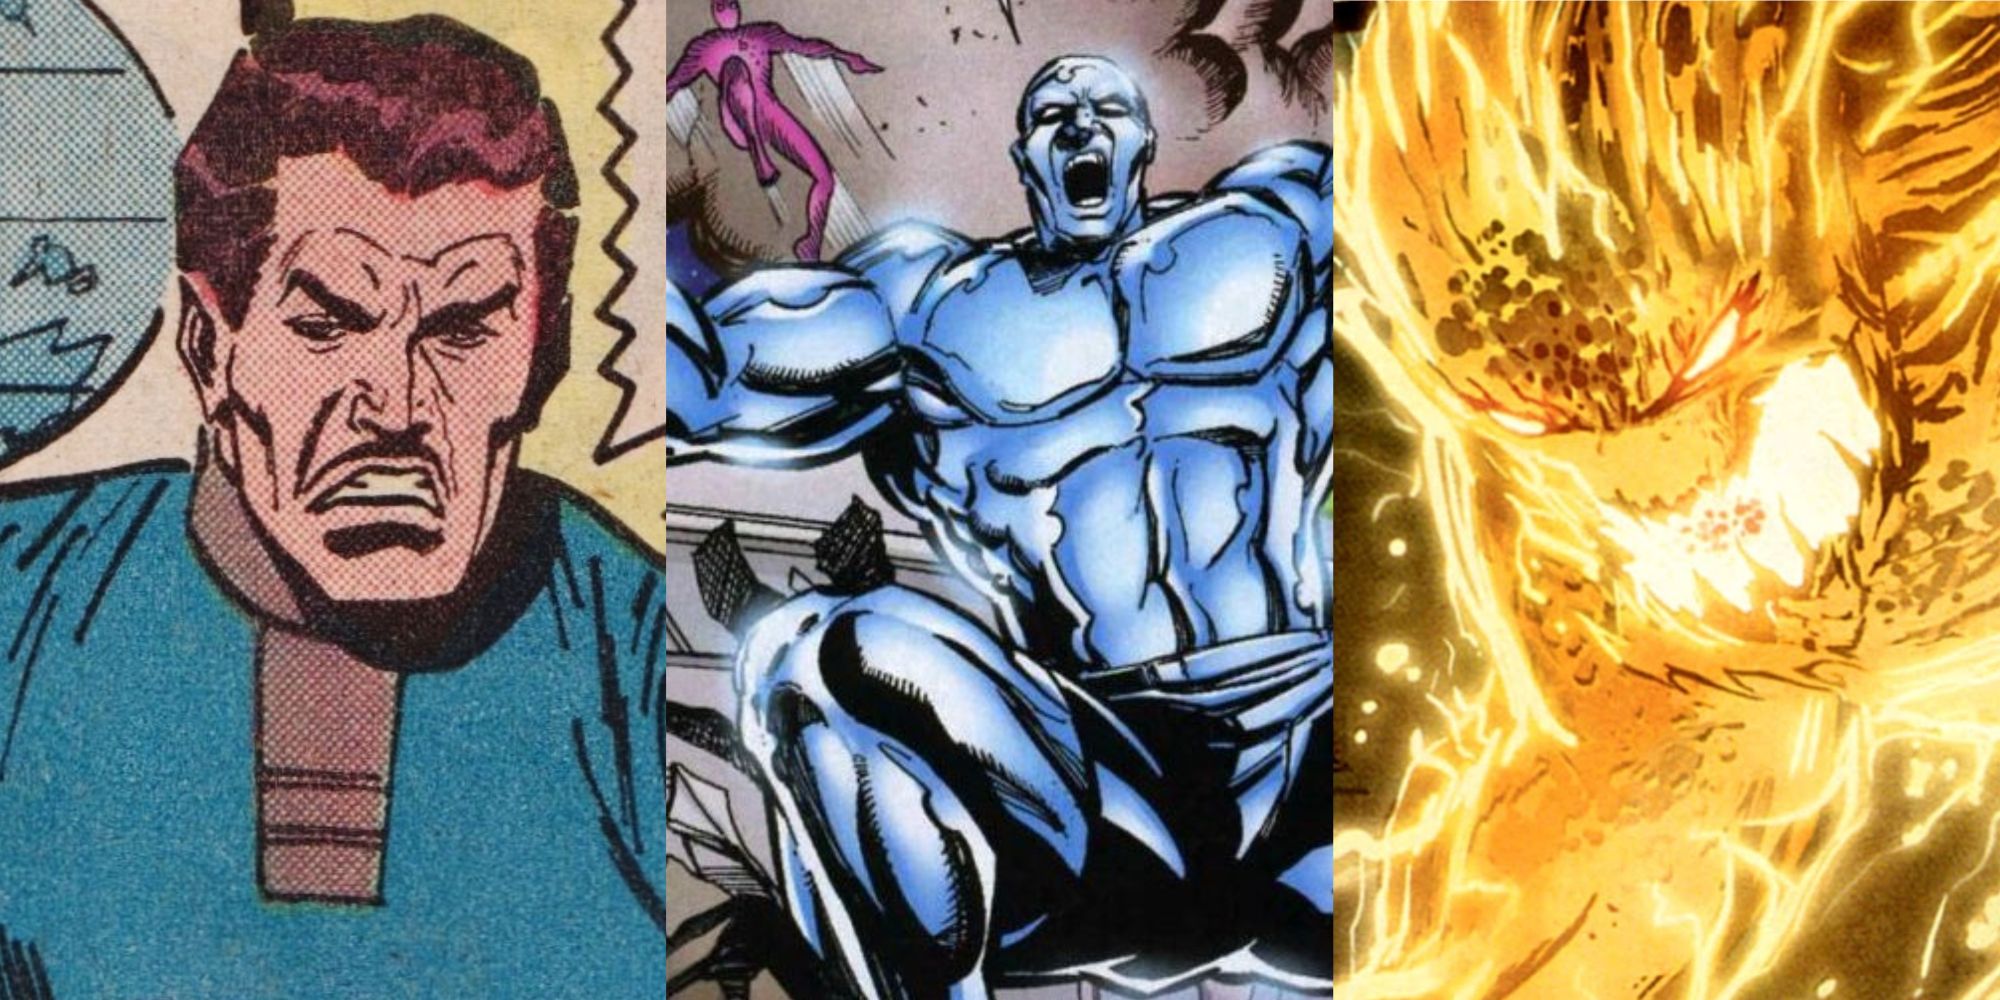 Splti image of Glenn Talbot, U-Foes and Zzzax from Marvel comics